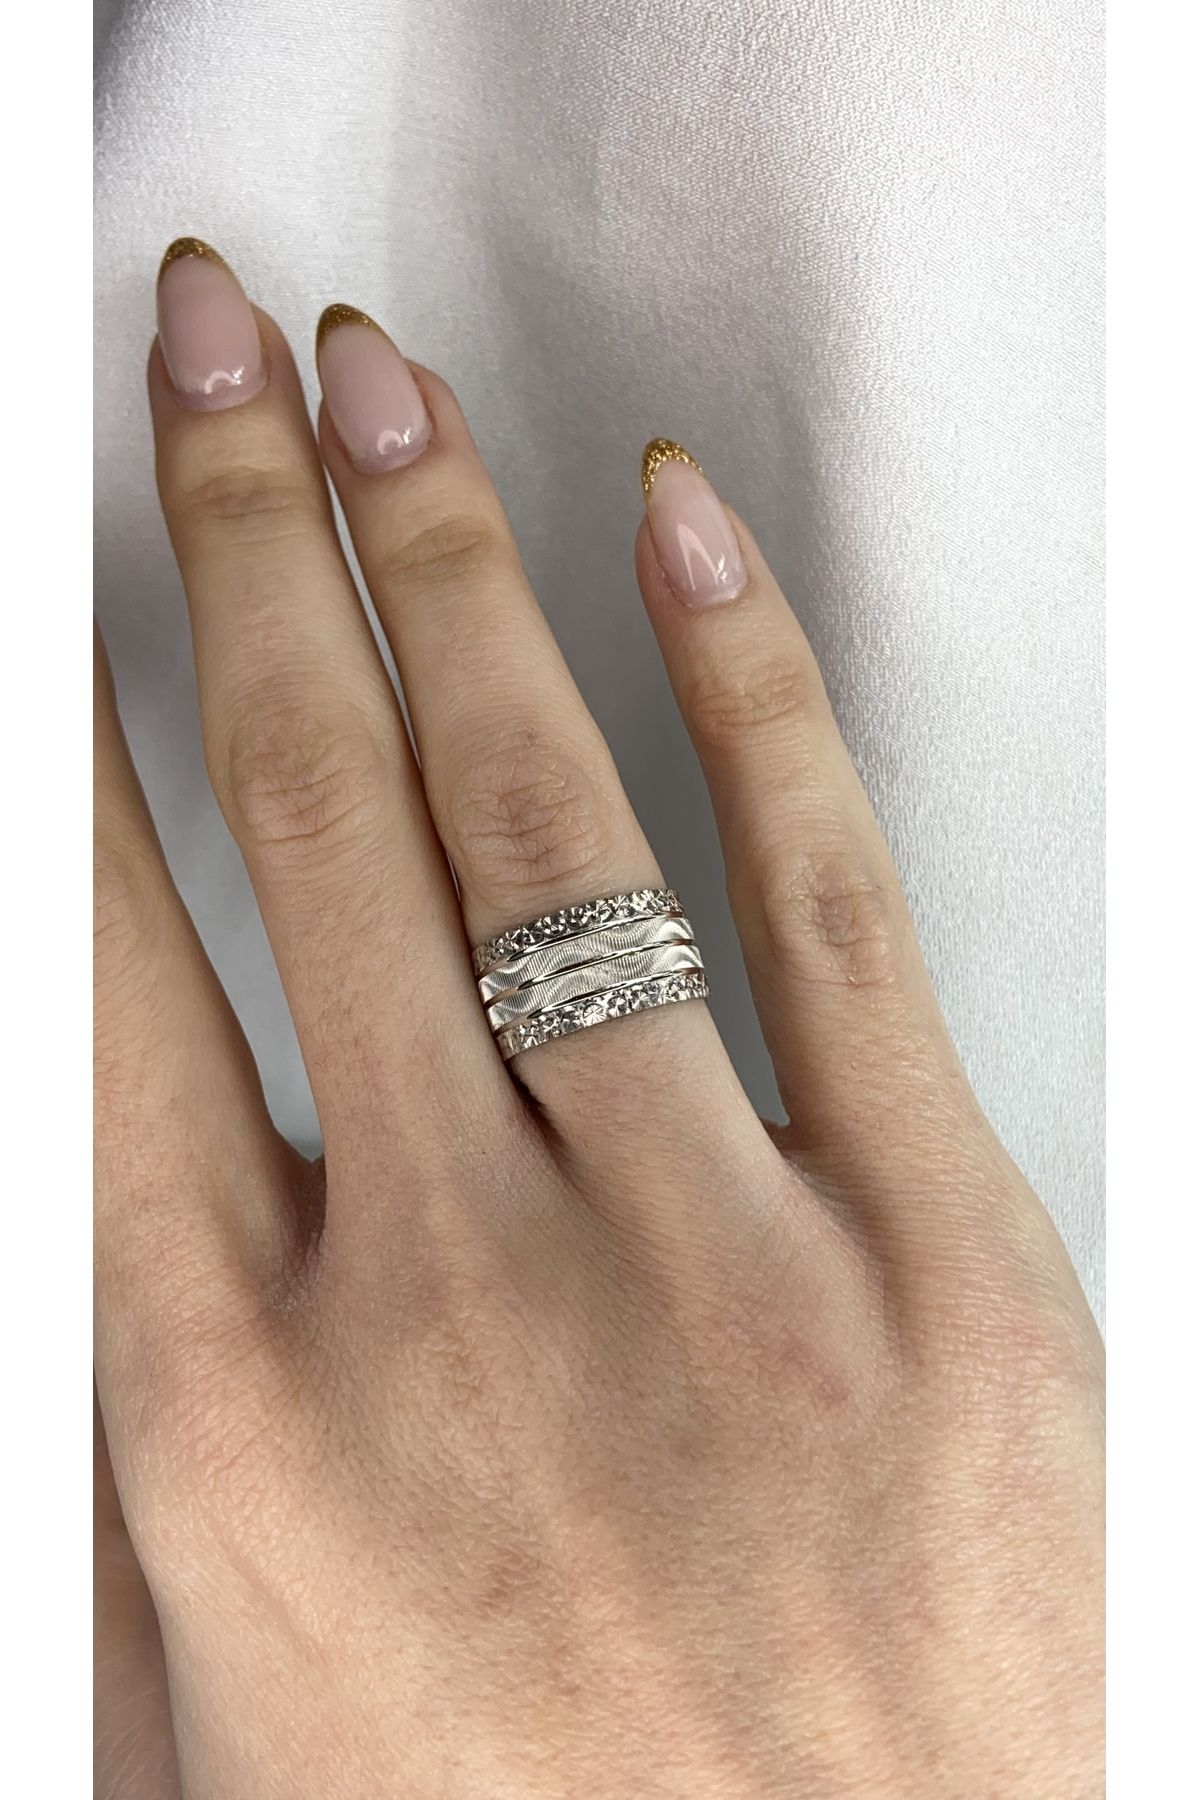 Selen’S Gümüş Gümüş Alyans Evlilik Yüzüğü Nişan Yüzüğü Söz Yüzüğü Çift Yüzüğü